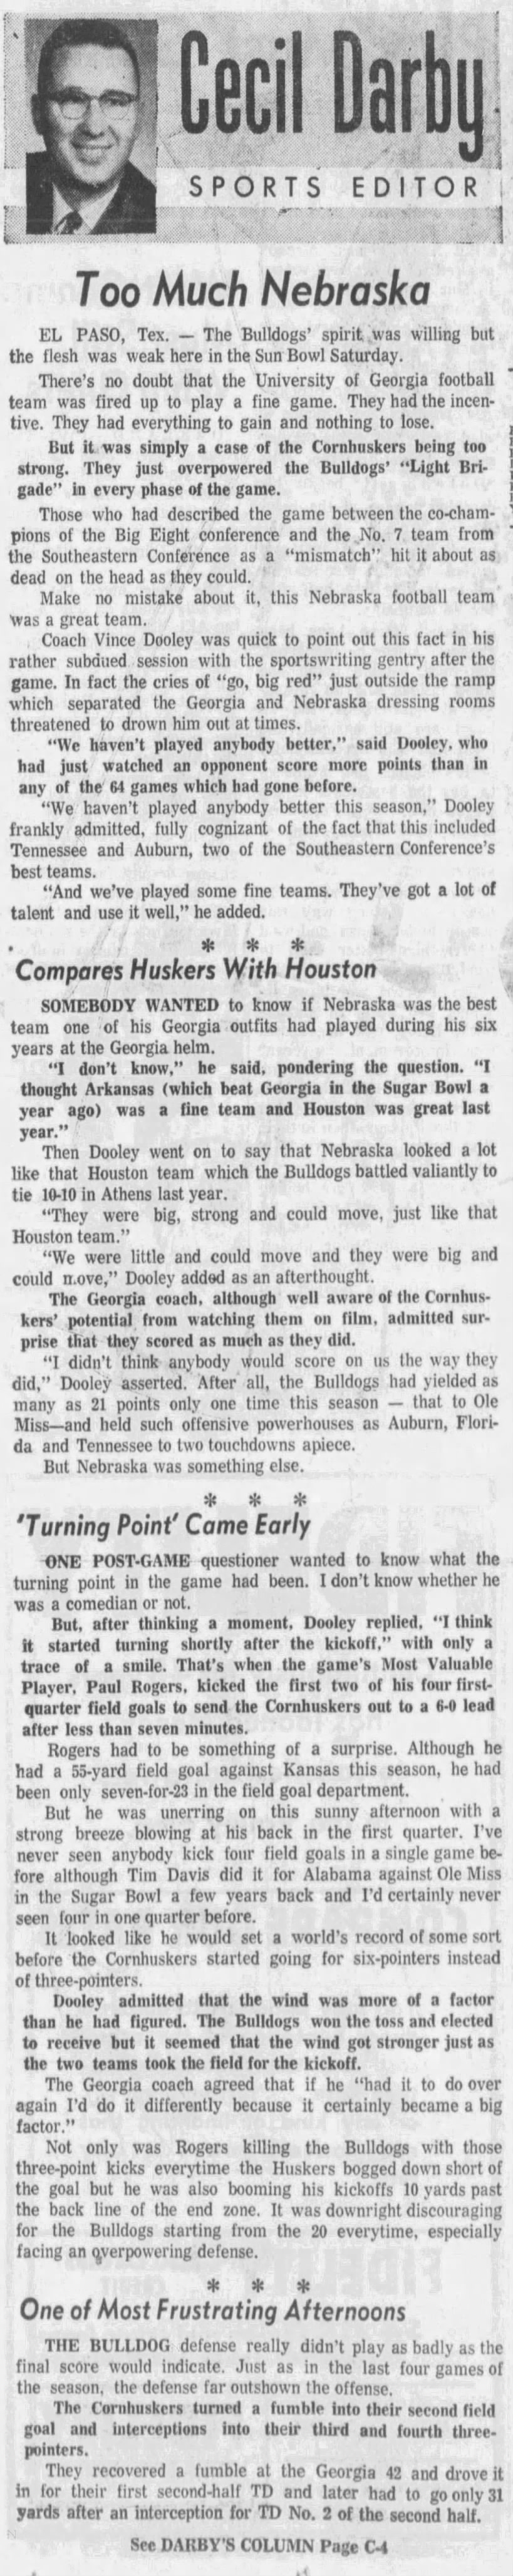 1969 Nebraska-Georgia football game column part 1